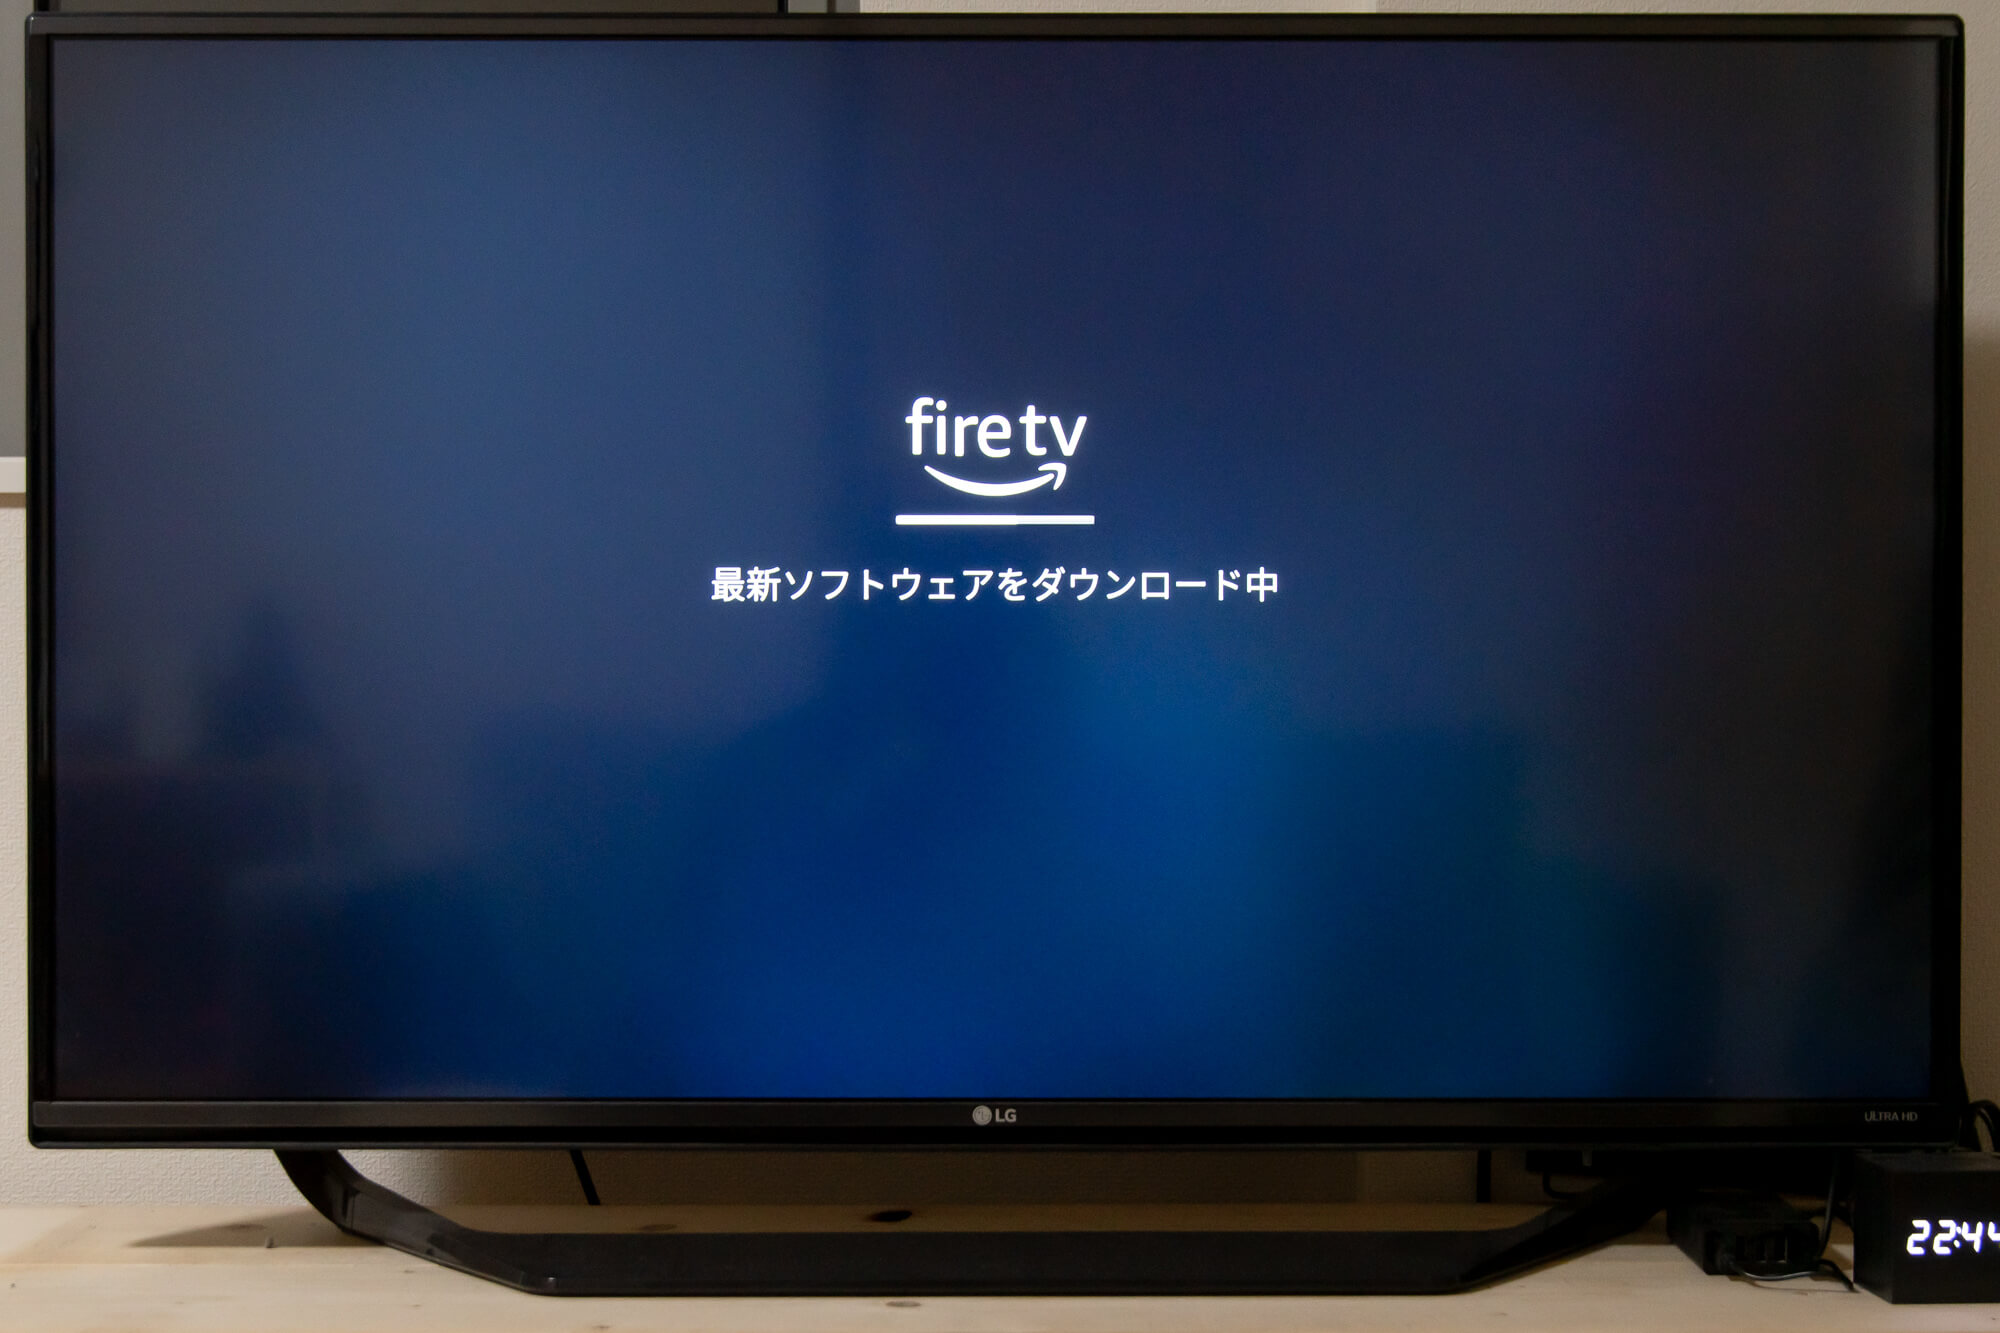 Fire TV Stick 4K レビュー